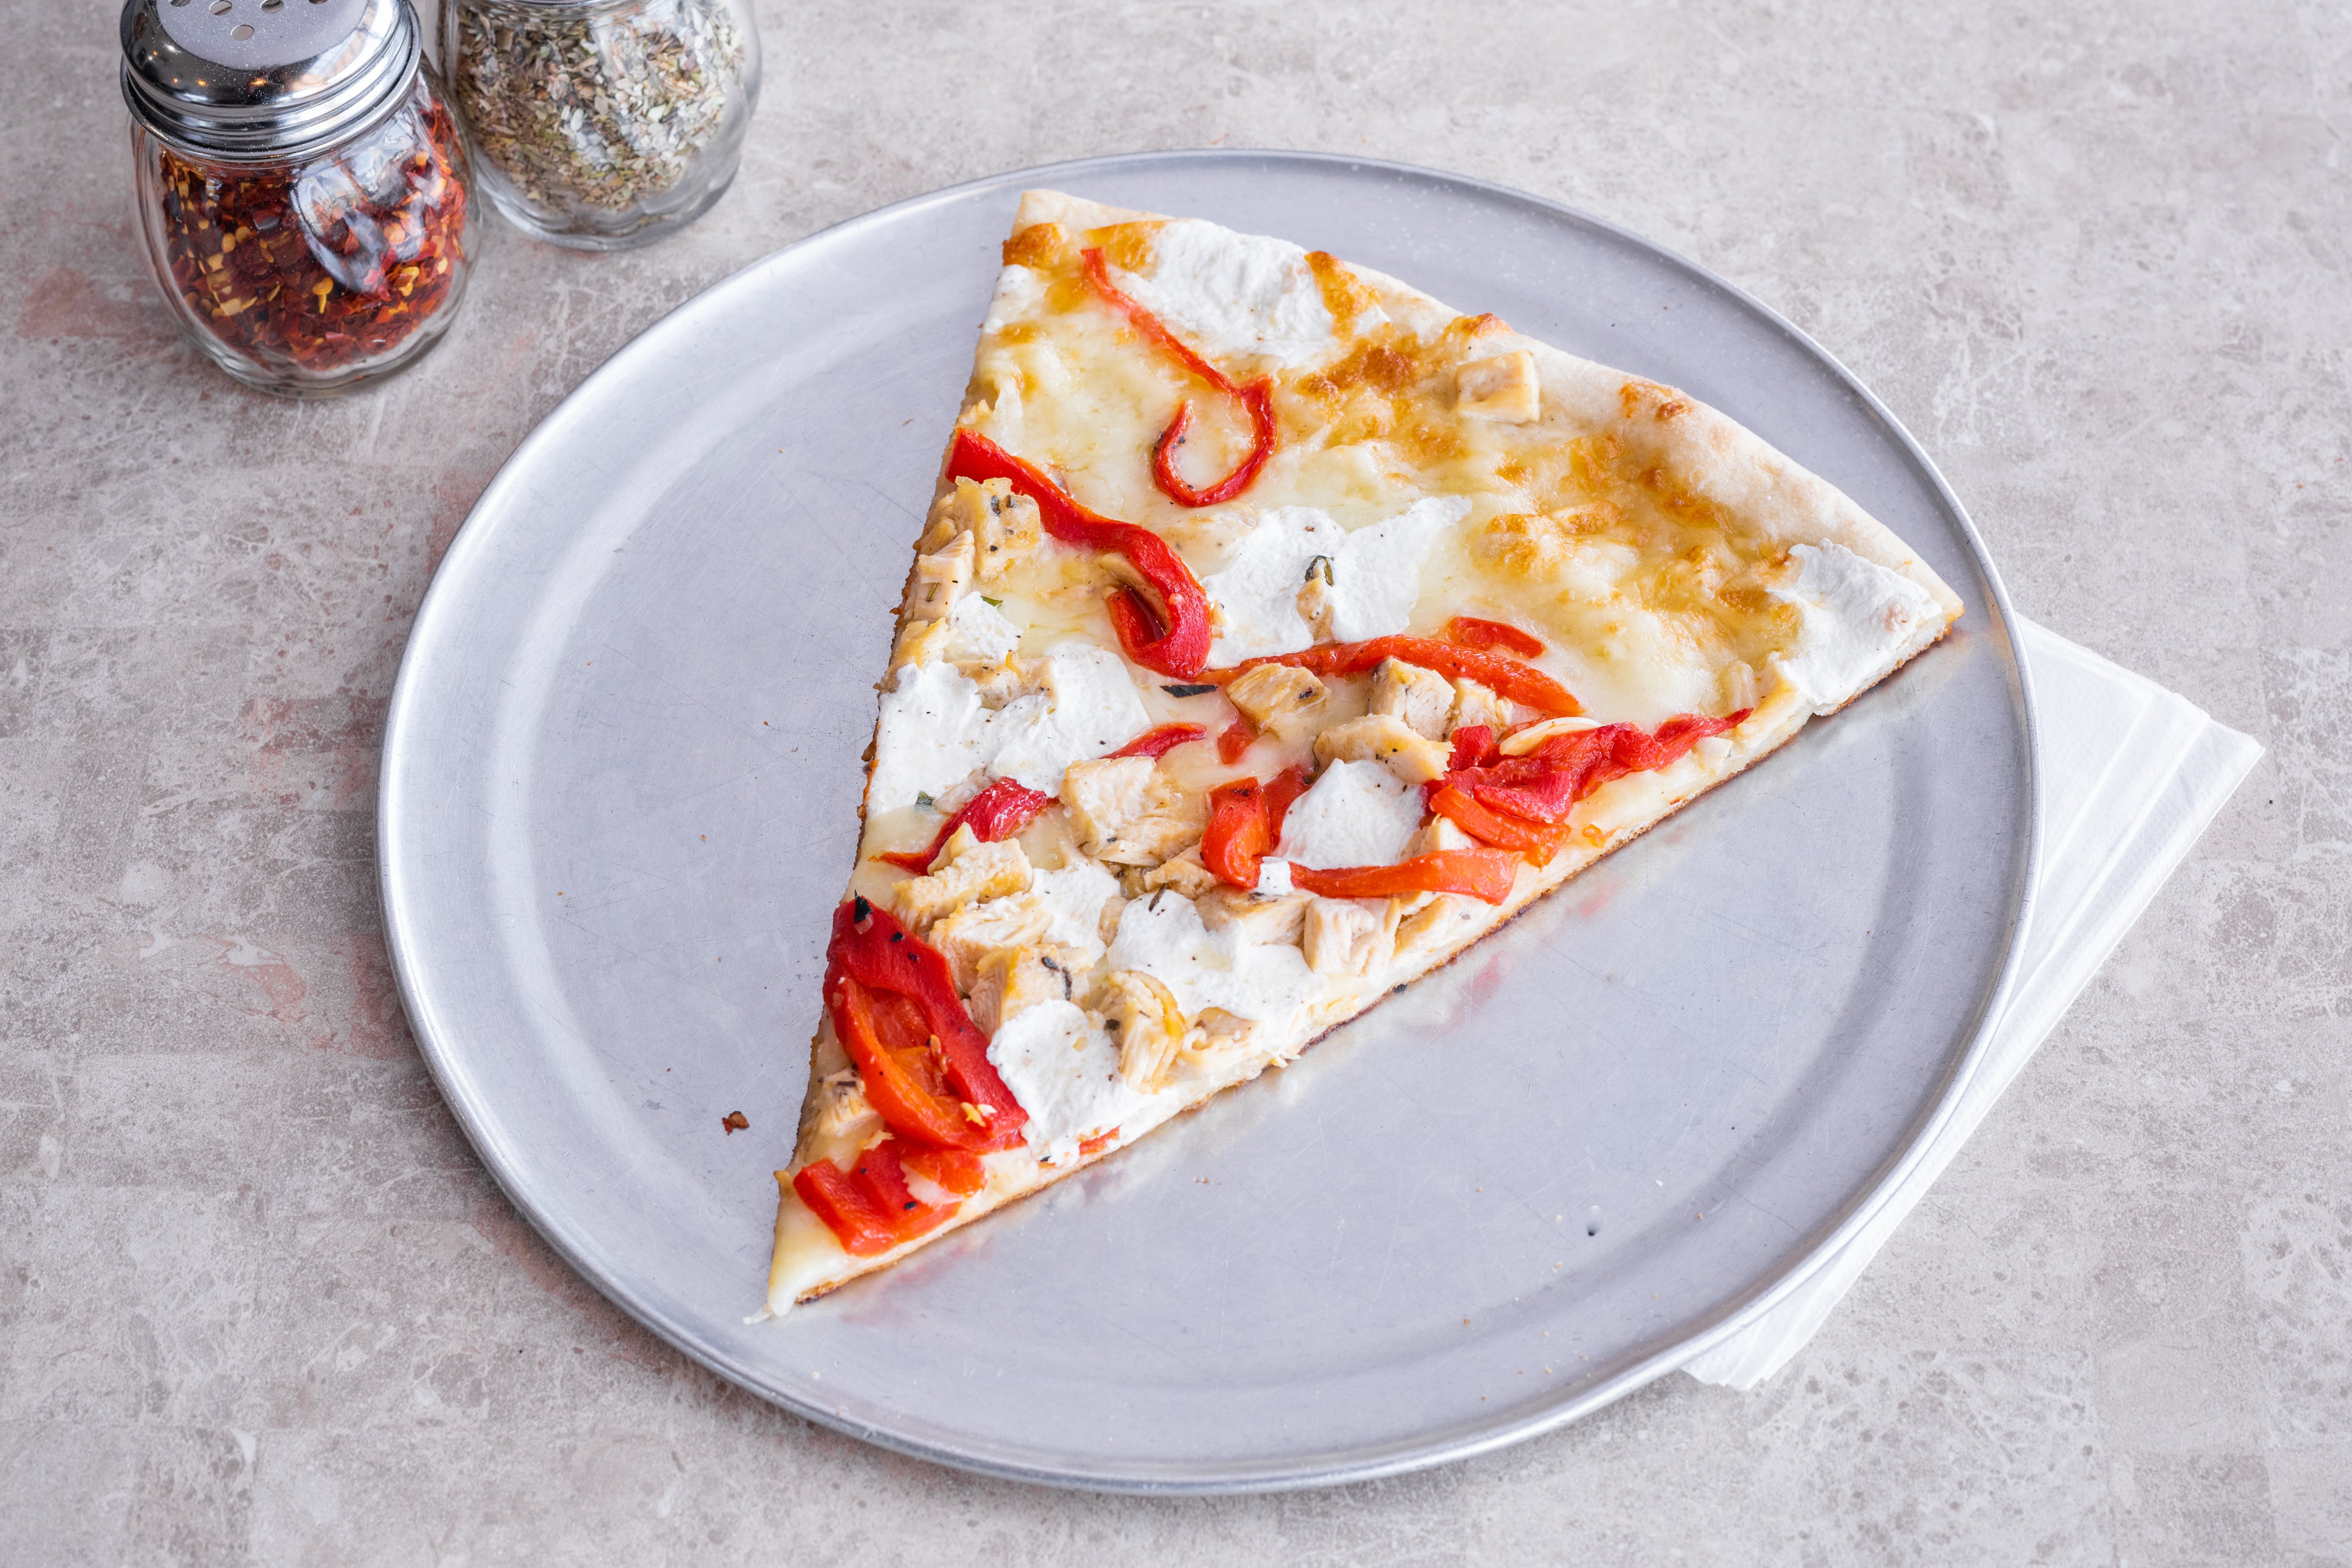 Tasty Tuesday: Papa's Pizza brings top-notch pizza, traditional Italian  recipes to the Roanoke Valley